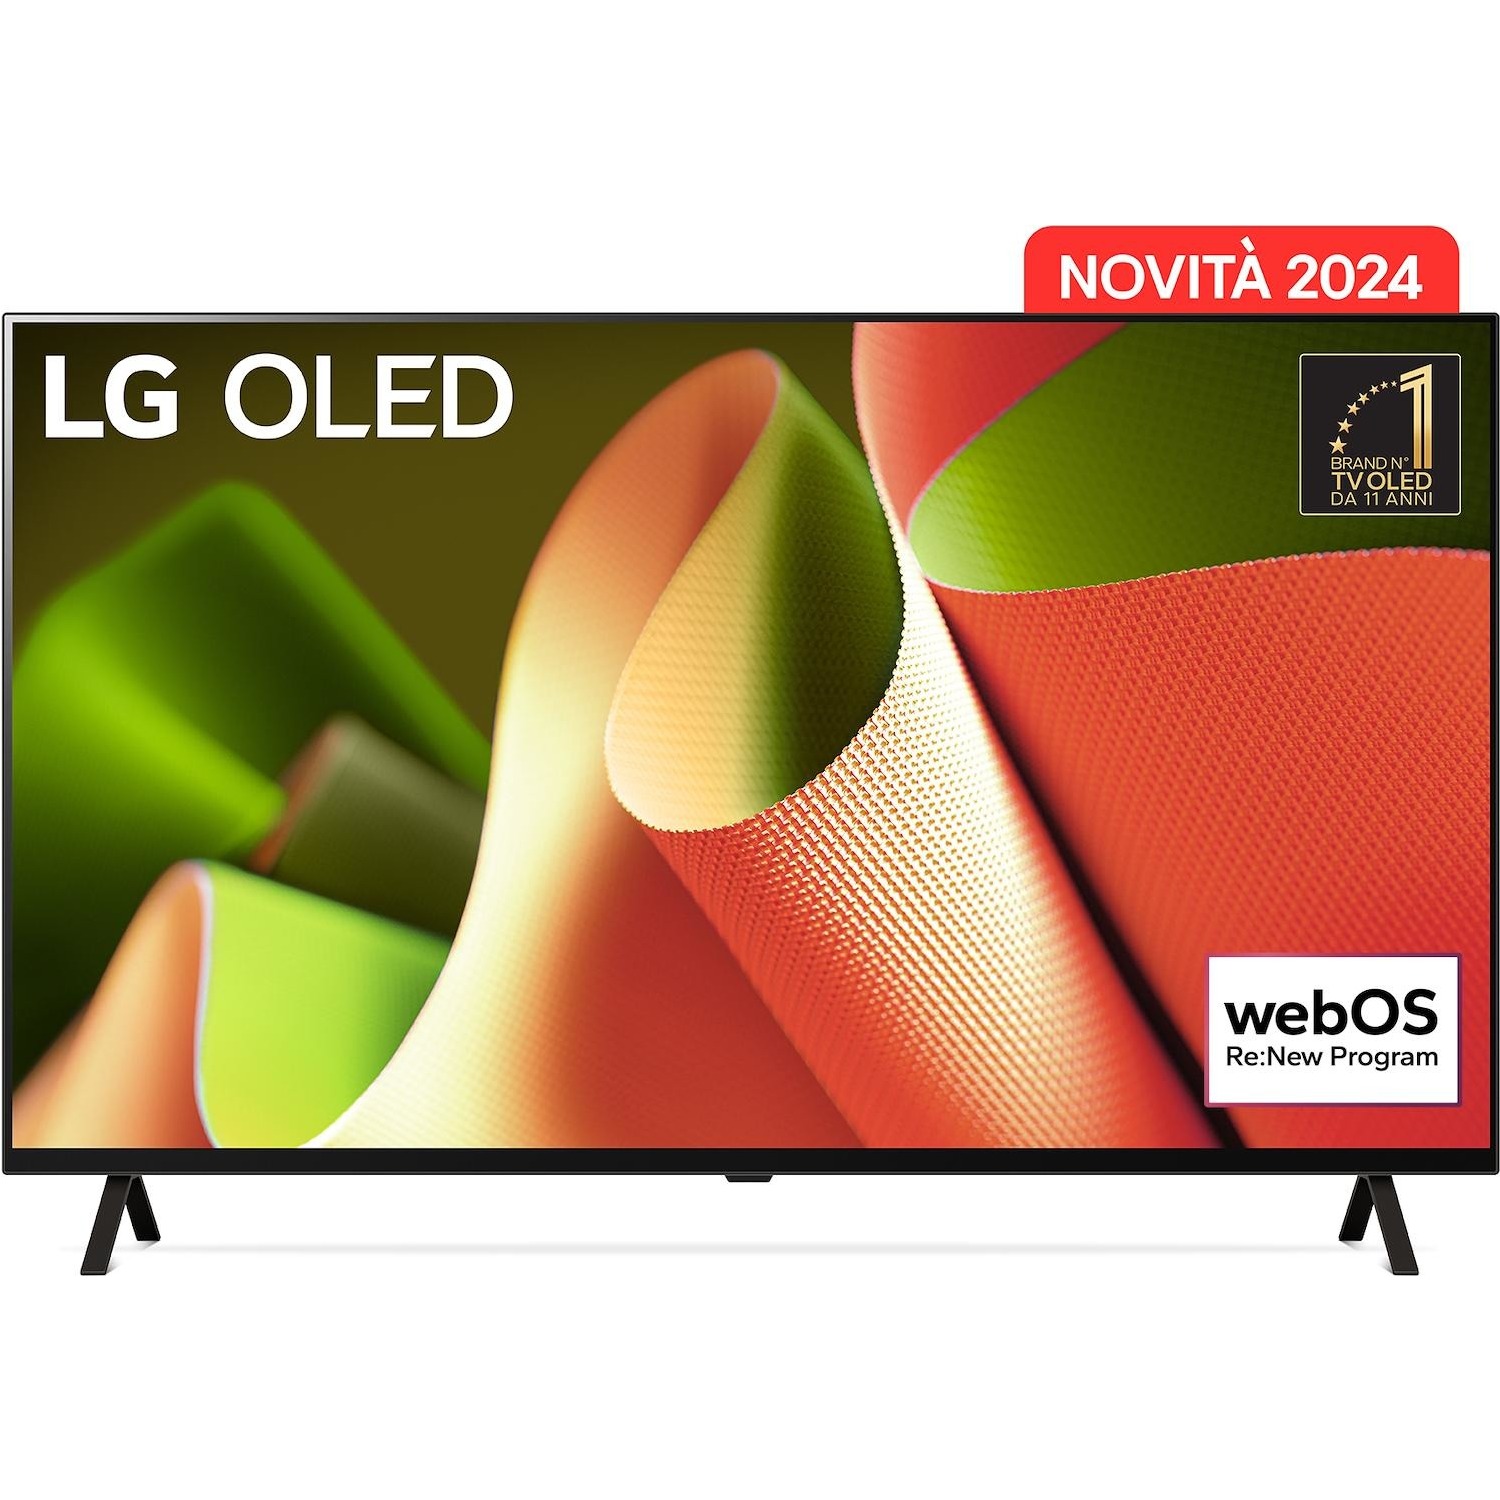 Immagine per TV OLED UHD 4K Smart LG OLED65B42 da DIMOStore